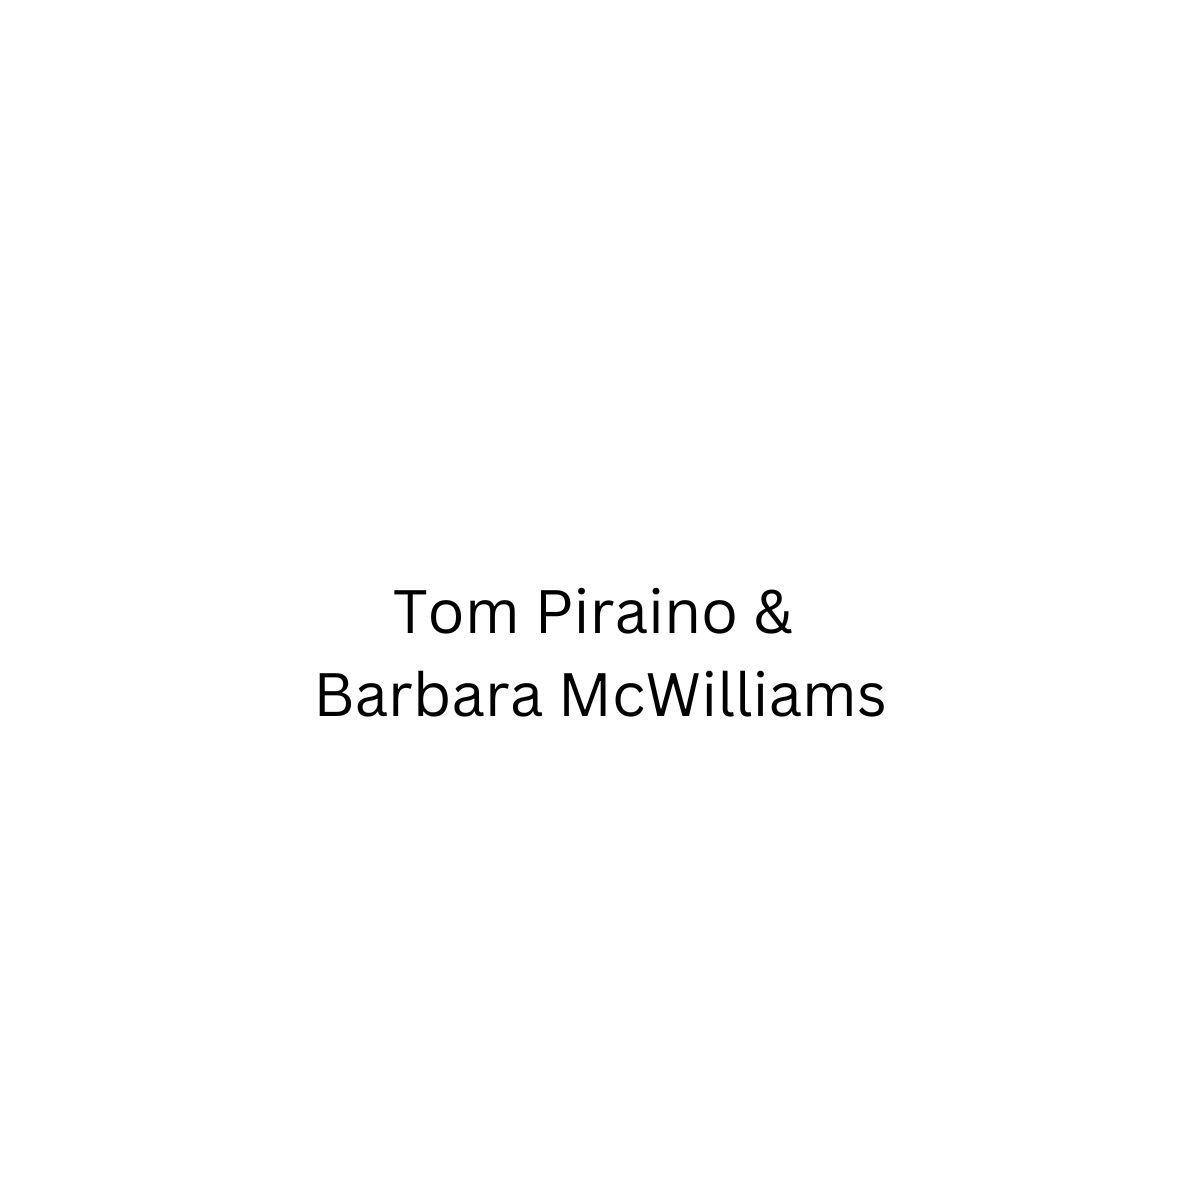 Tom Piraino & Barbara McWilliams